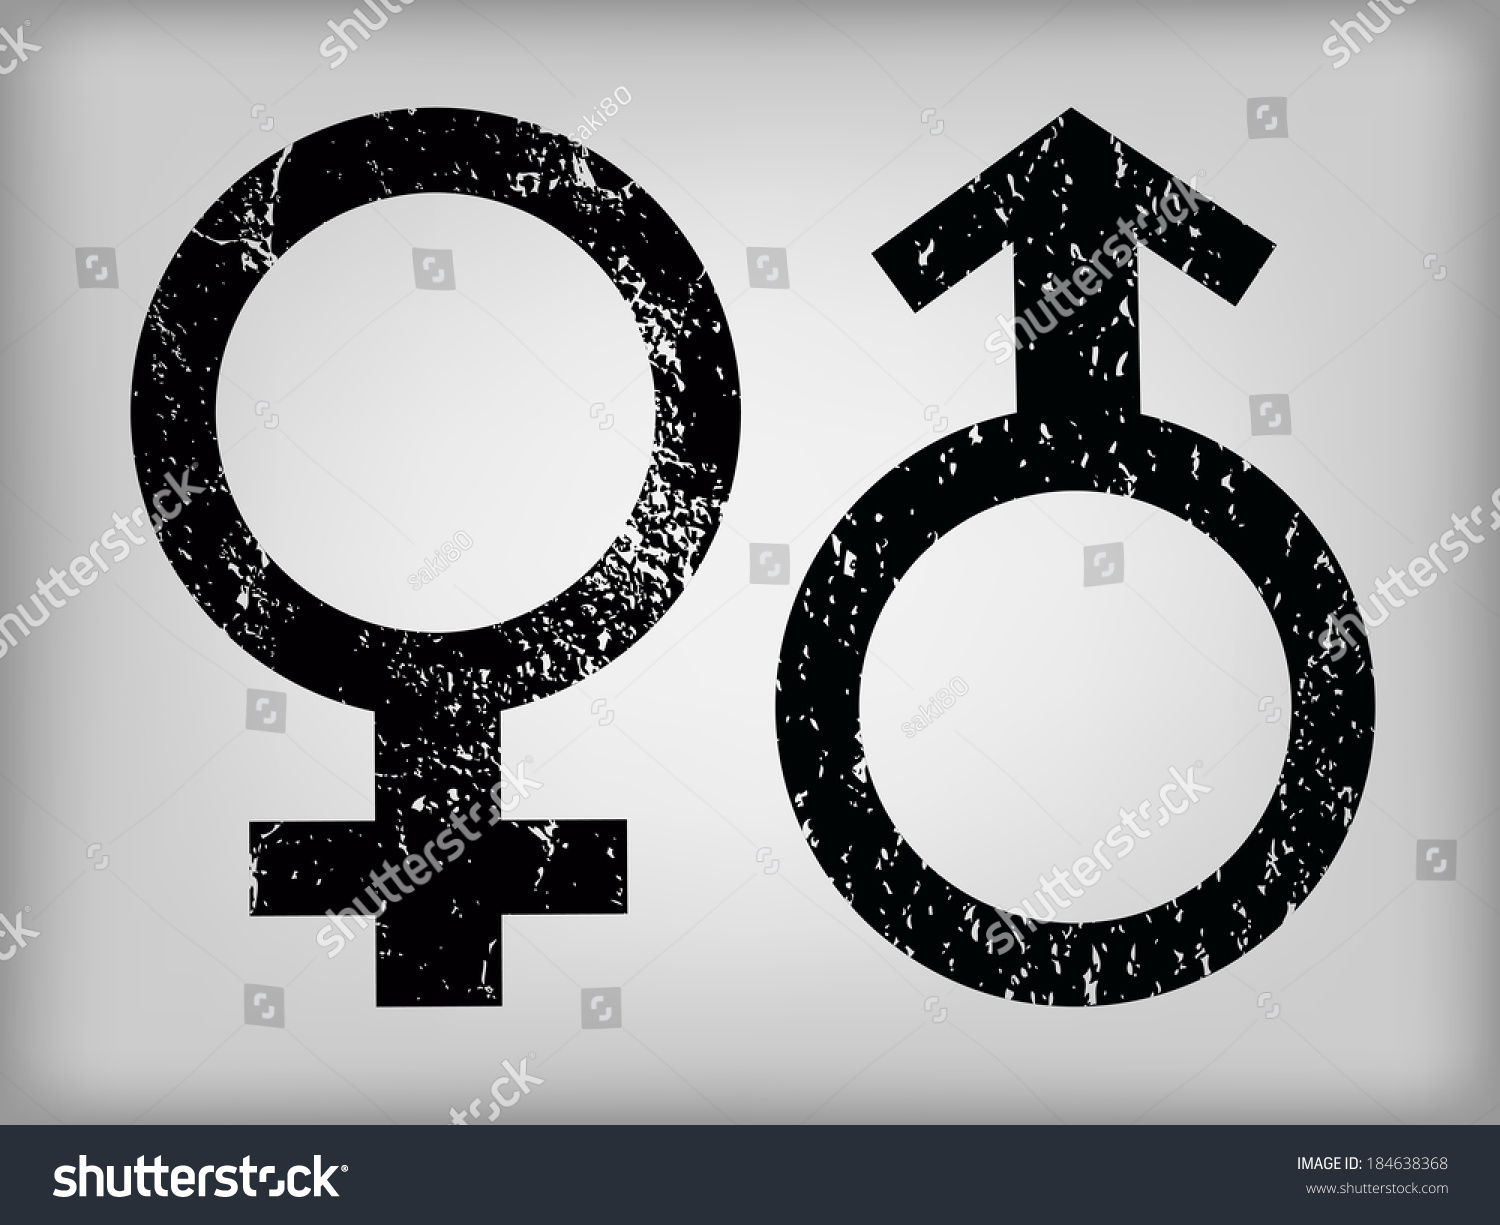 Male And Female Symbols Stock Vector Illustration 184638368 Shutterstock